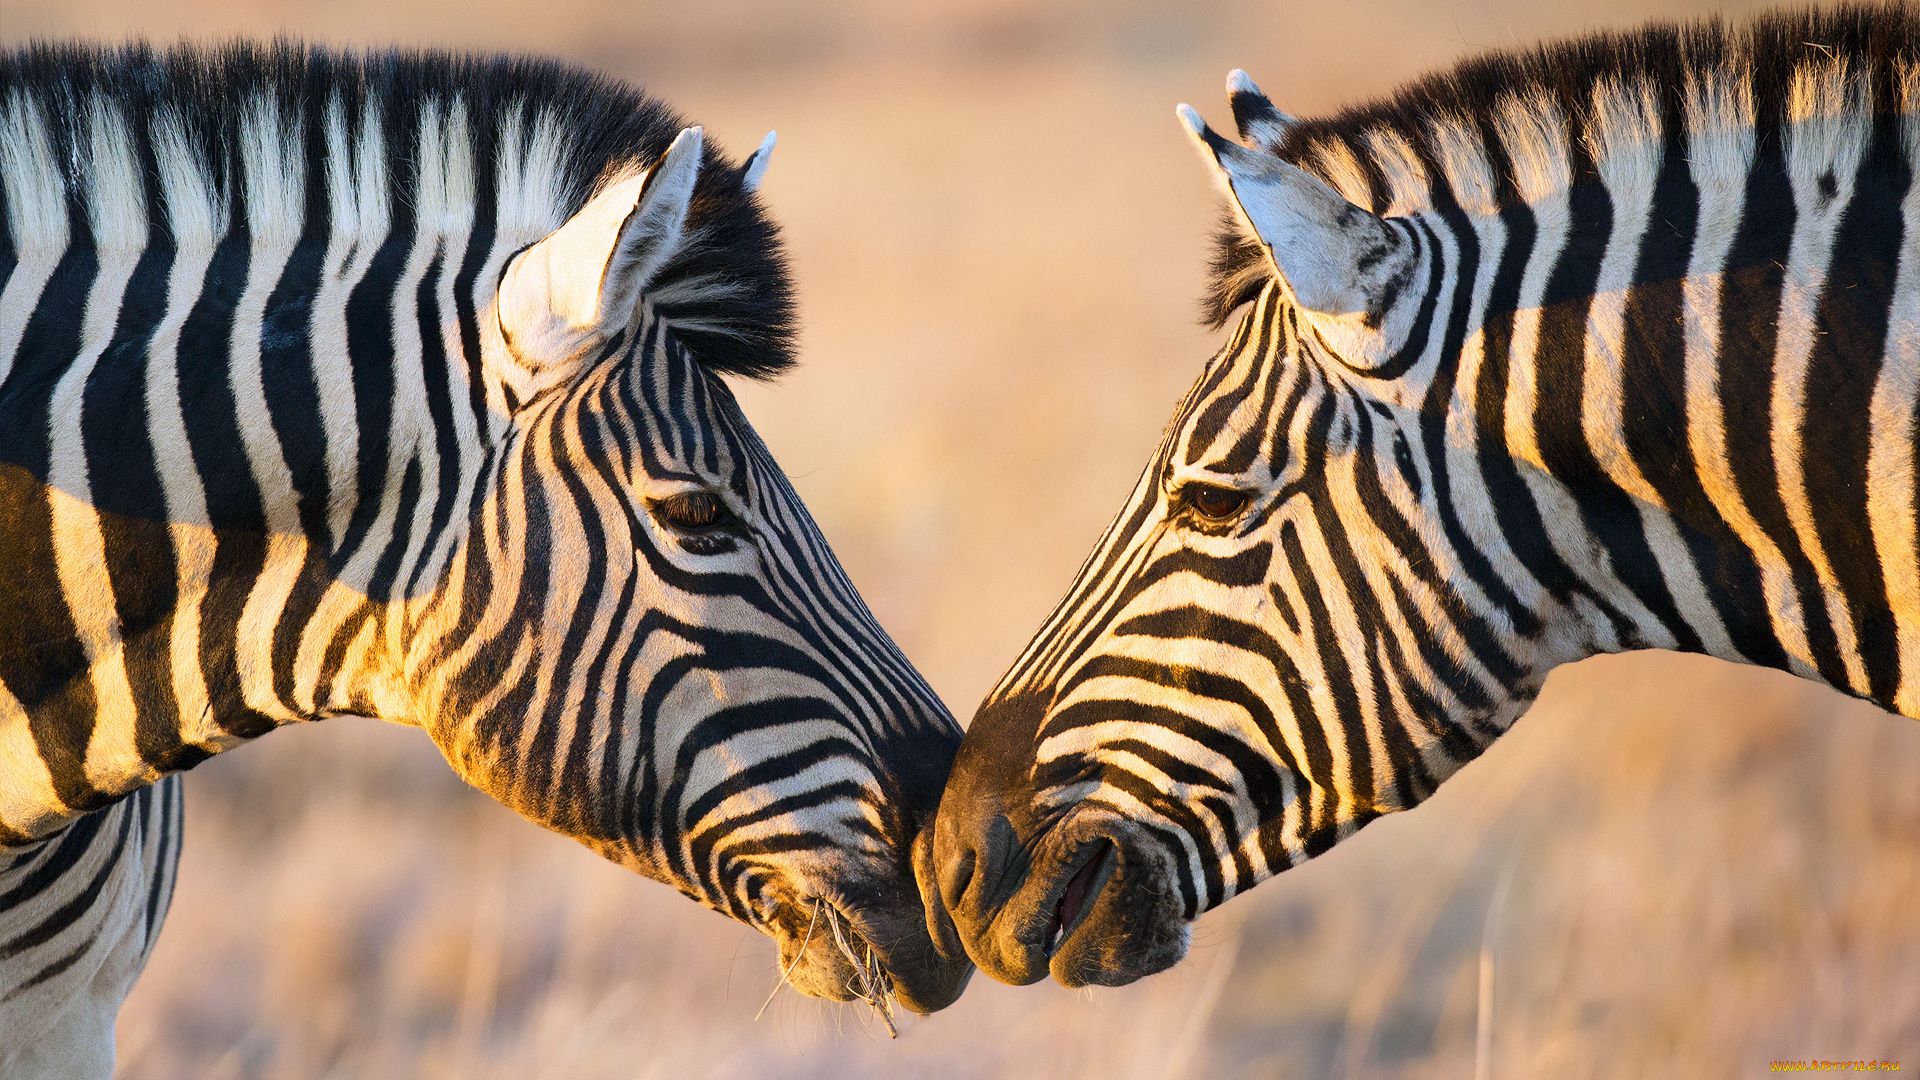 Zebra In Africa